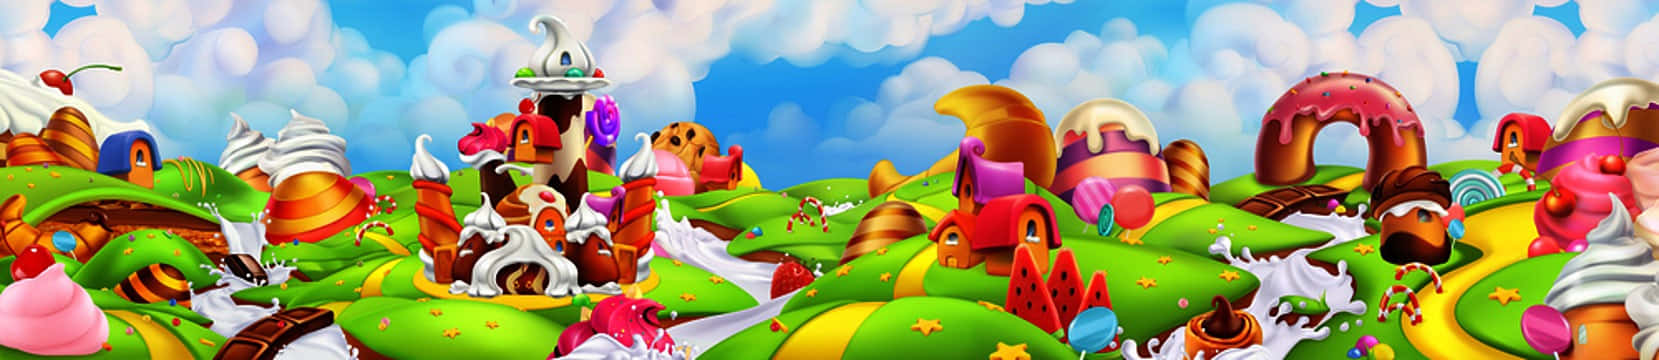 Candy Land 1659 X 360 Wallpaper